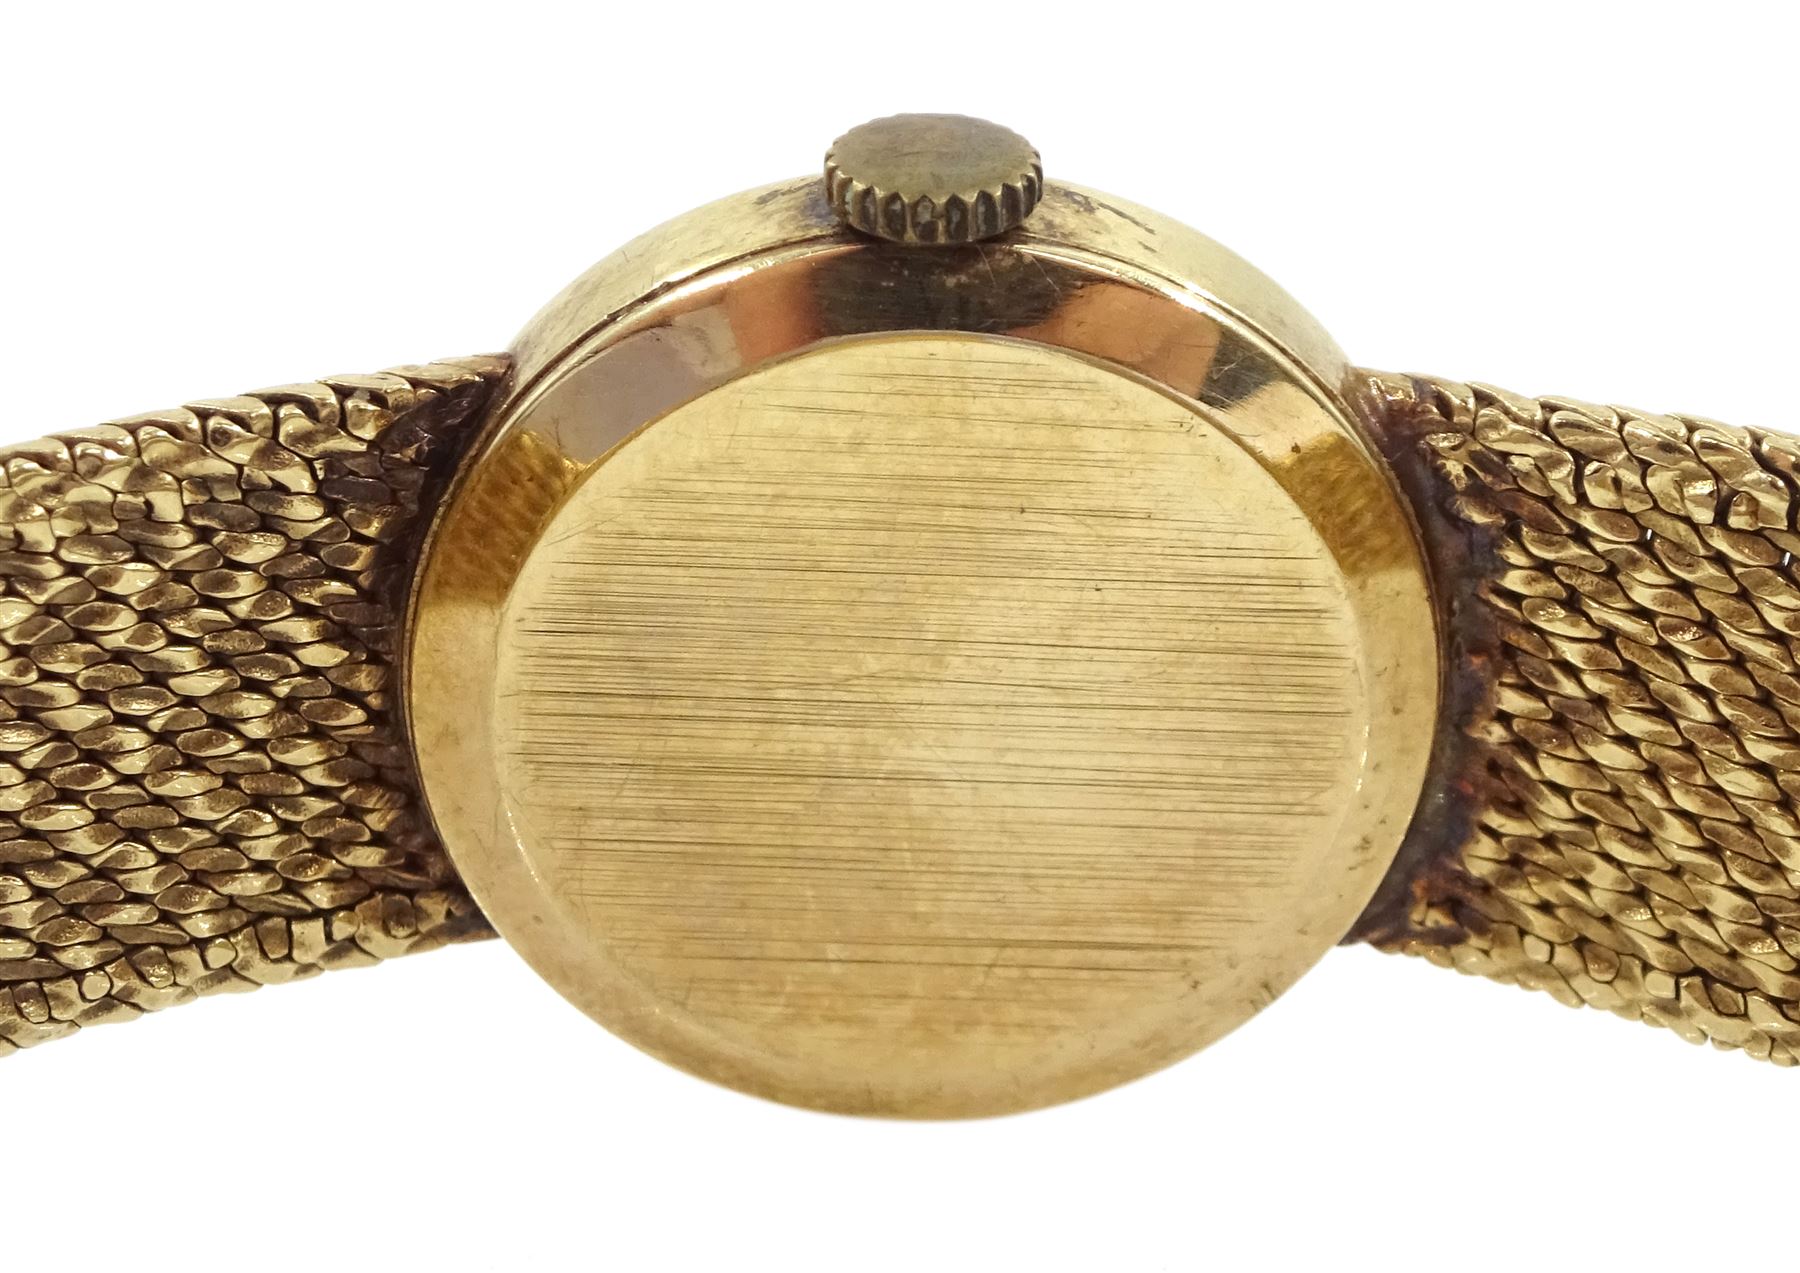 Omega ladies 9ct gold manual wind wristwatch - Image 3 of 3